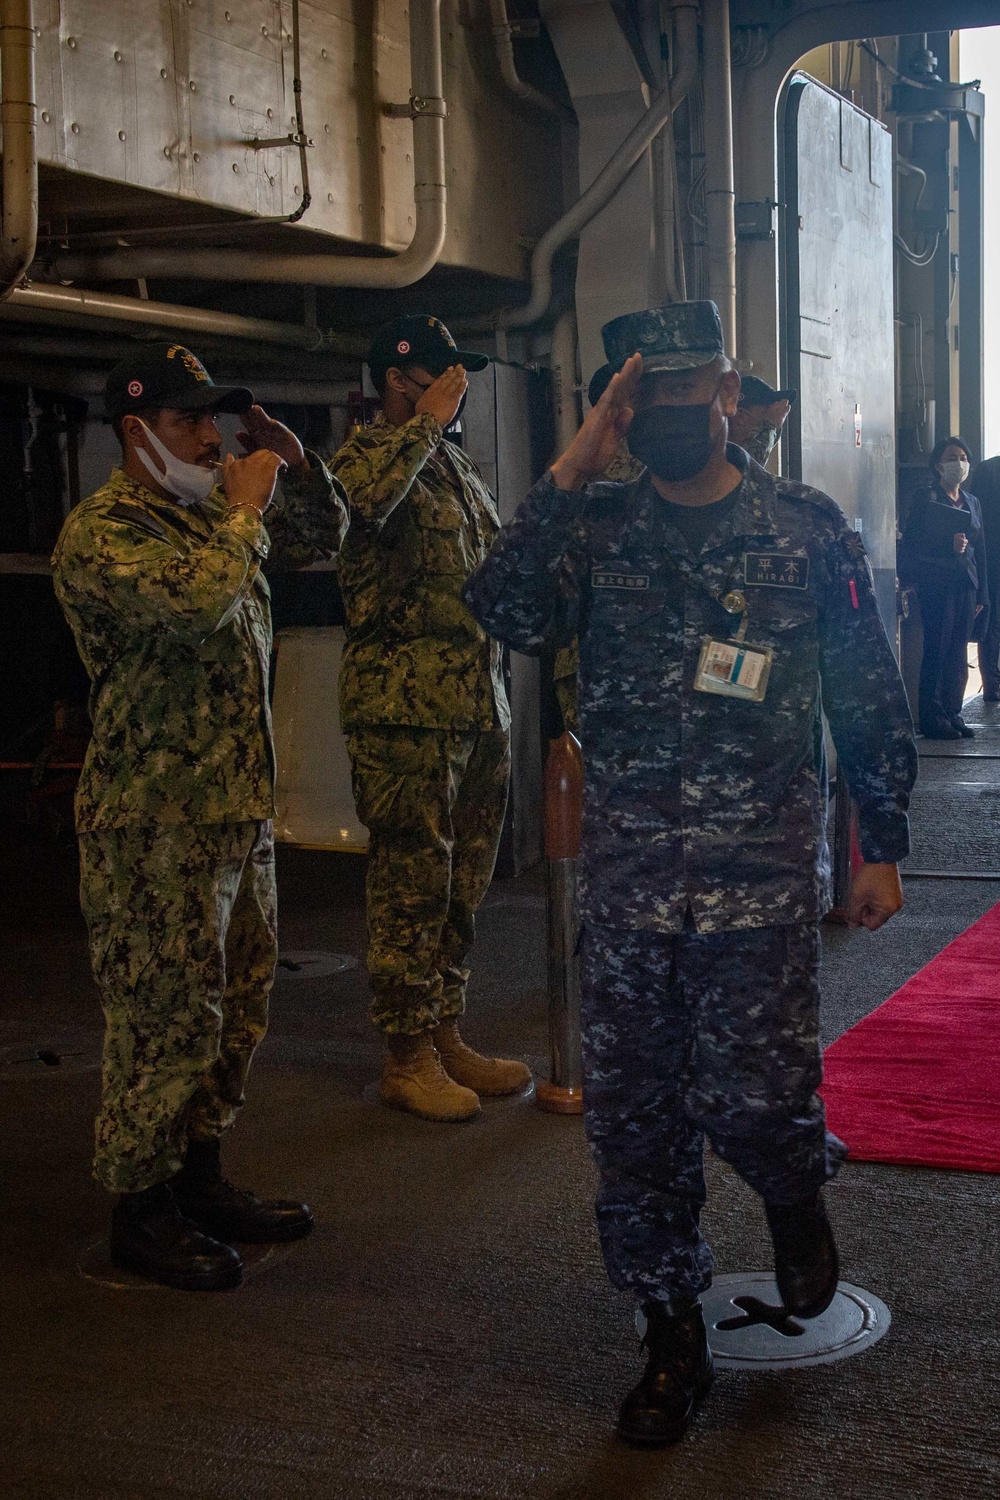 USS America (LHA 6) Hosts Ship Tour In Iwakuni